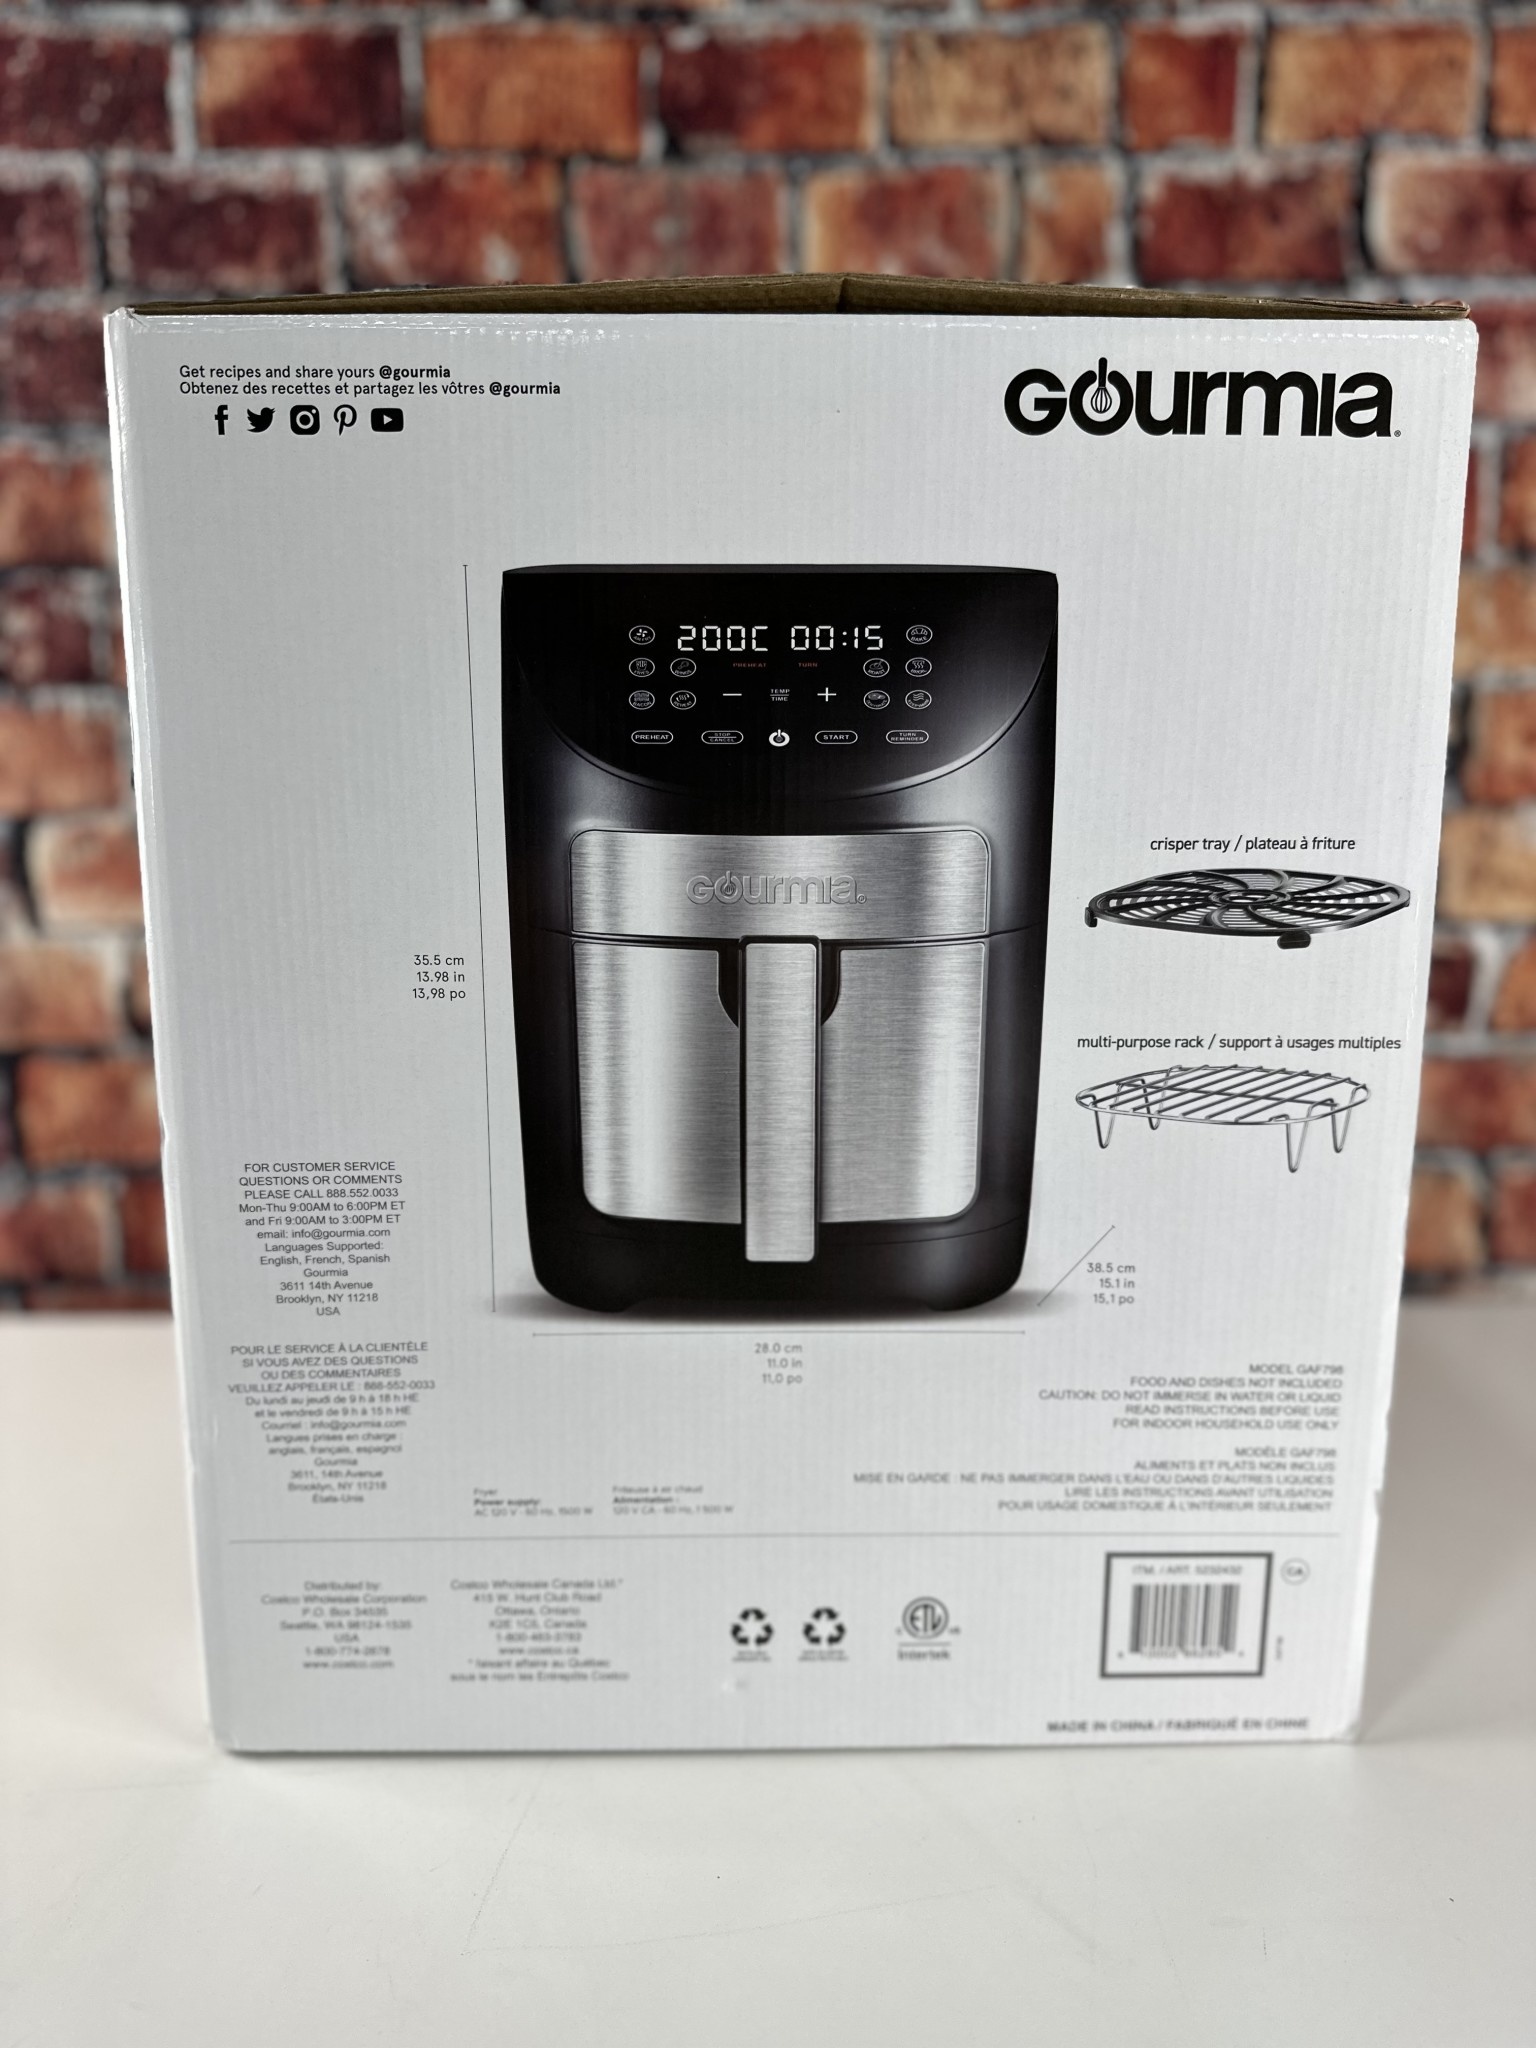 This Gourmia 7-Quart Digital Air Fryer, is just $39.99 in Store